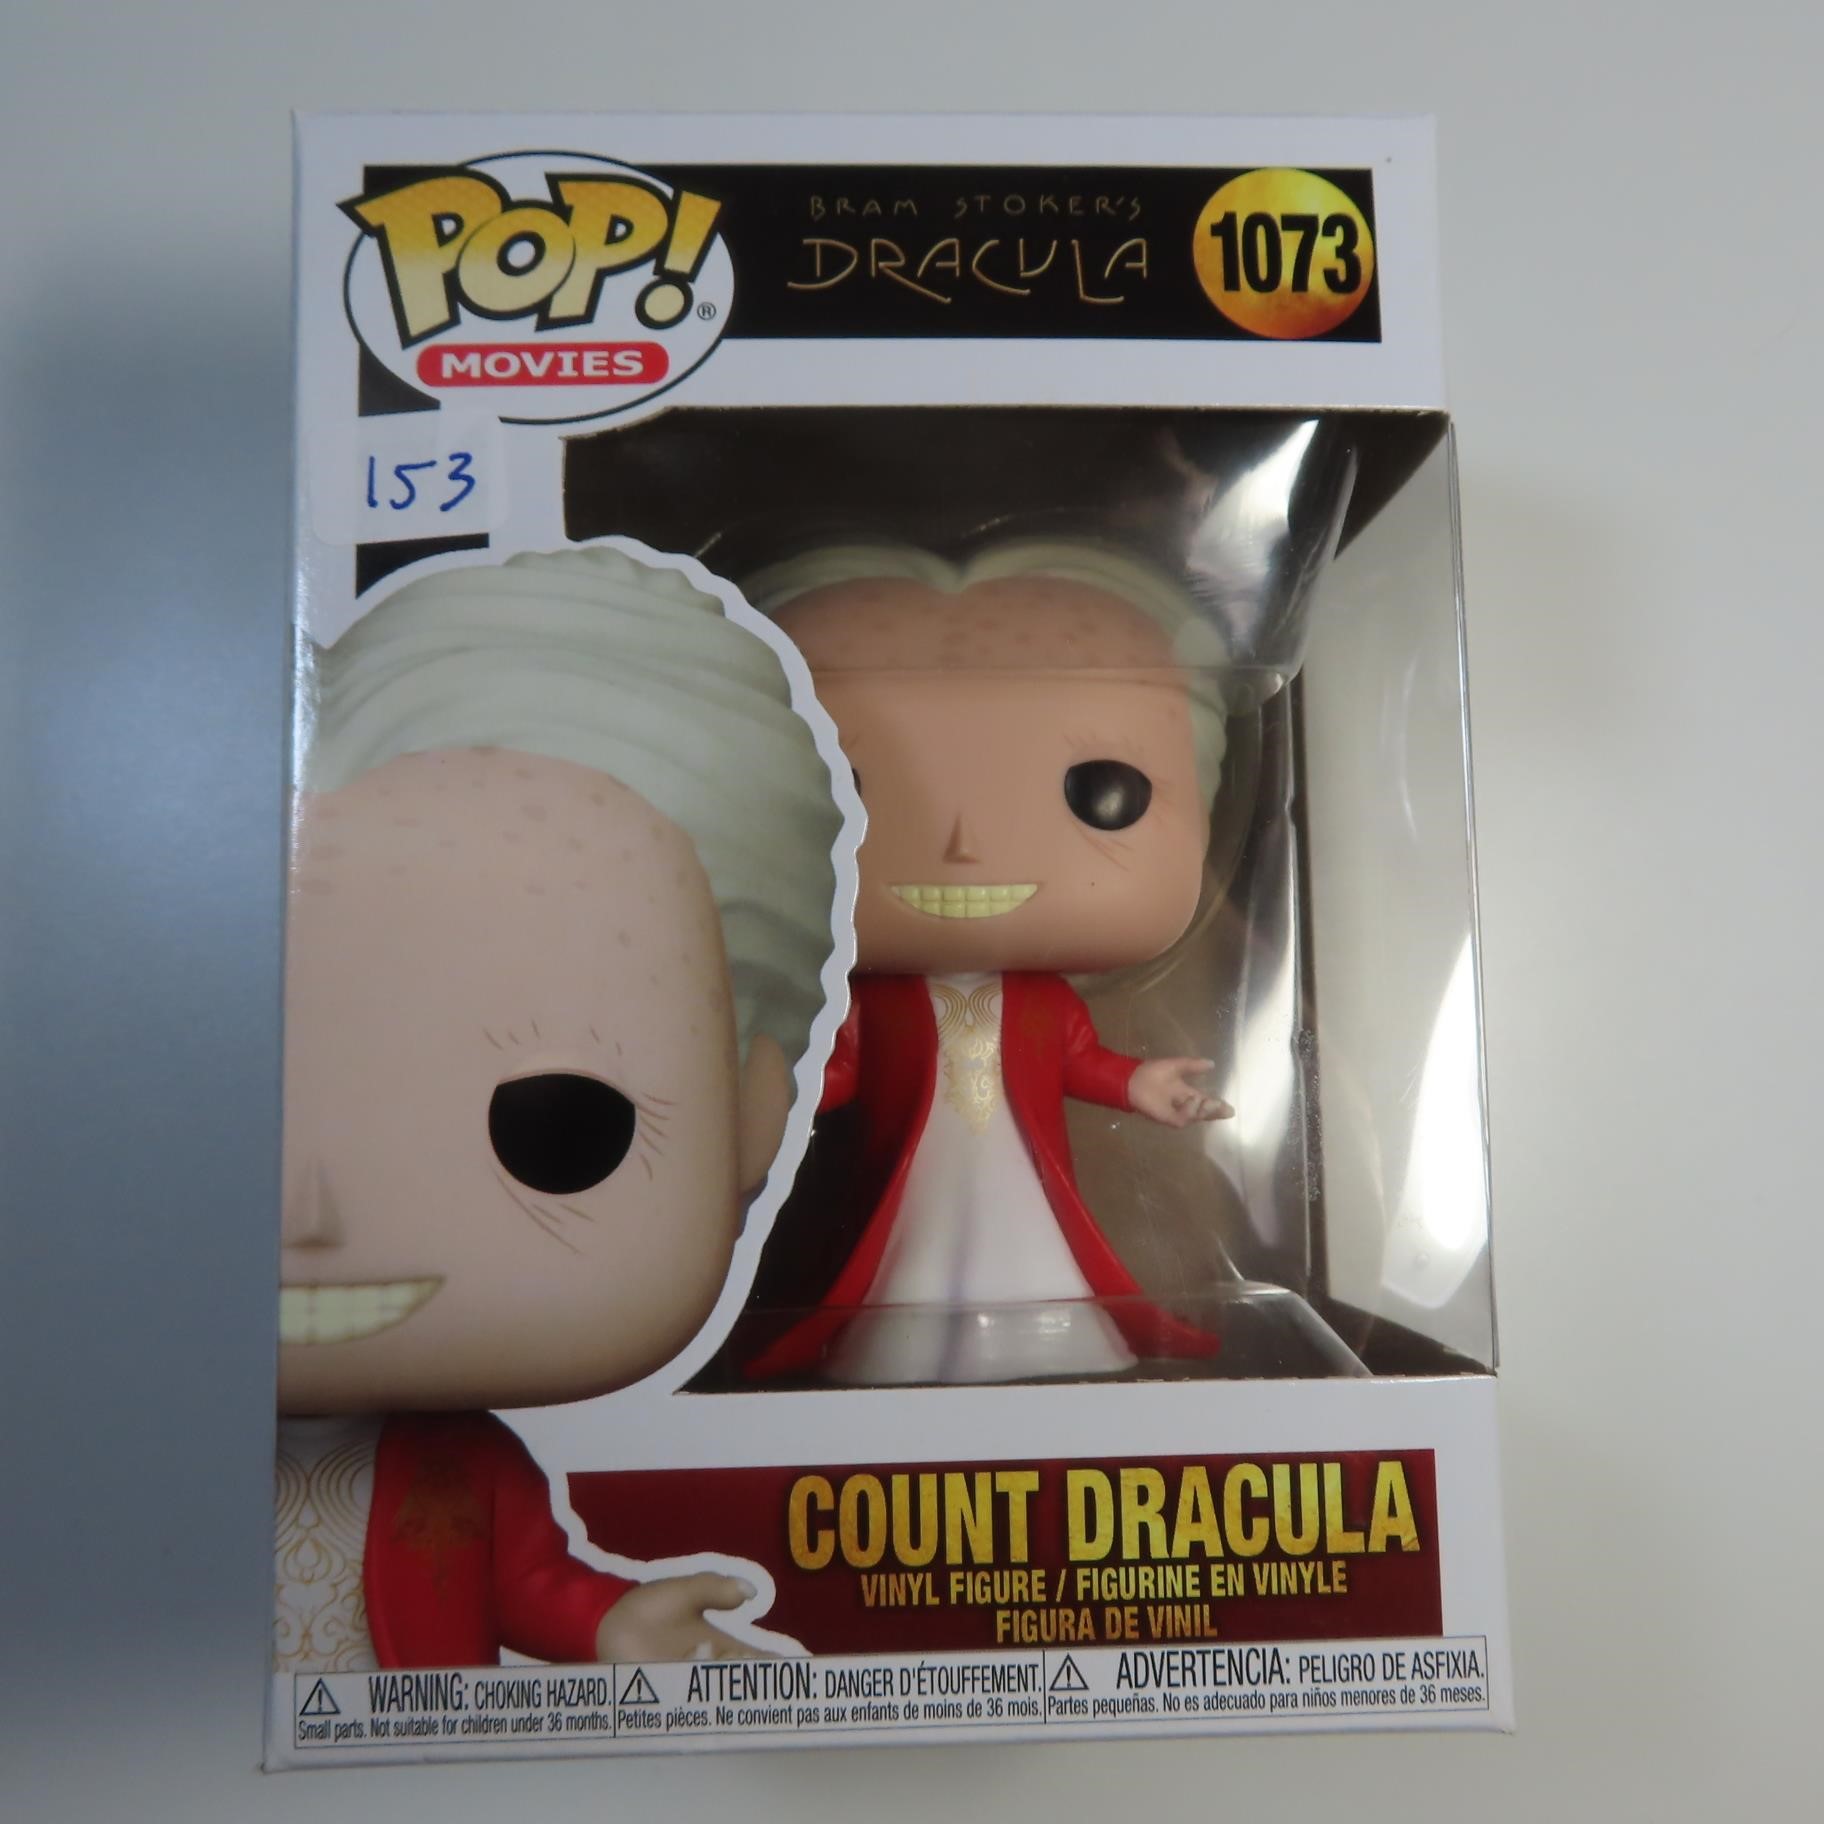 Count Dracula Funko Pop!